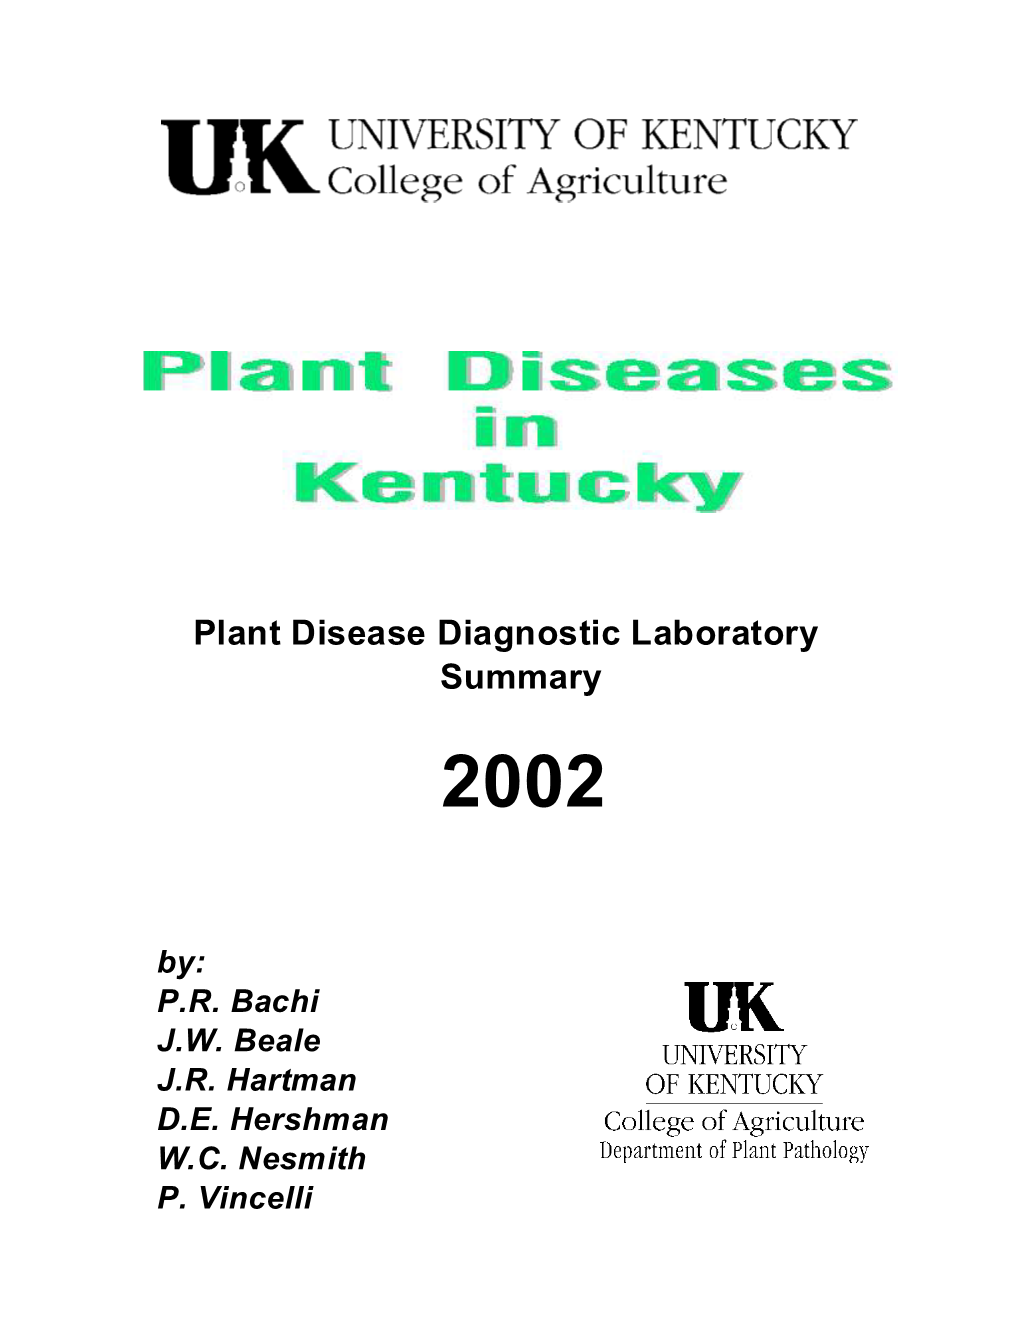 2002 Plant Disease Diagnostic Laboratory Report